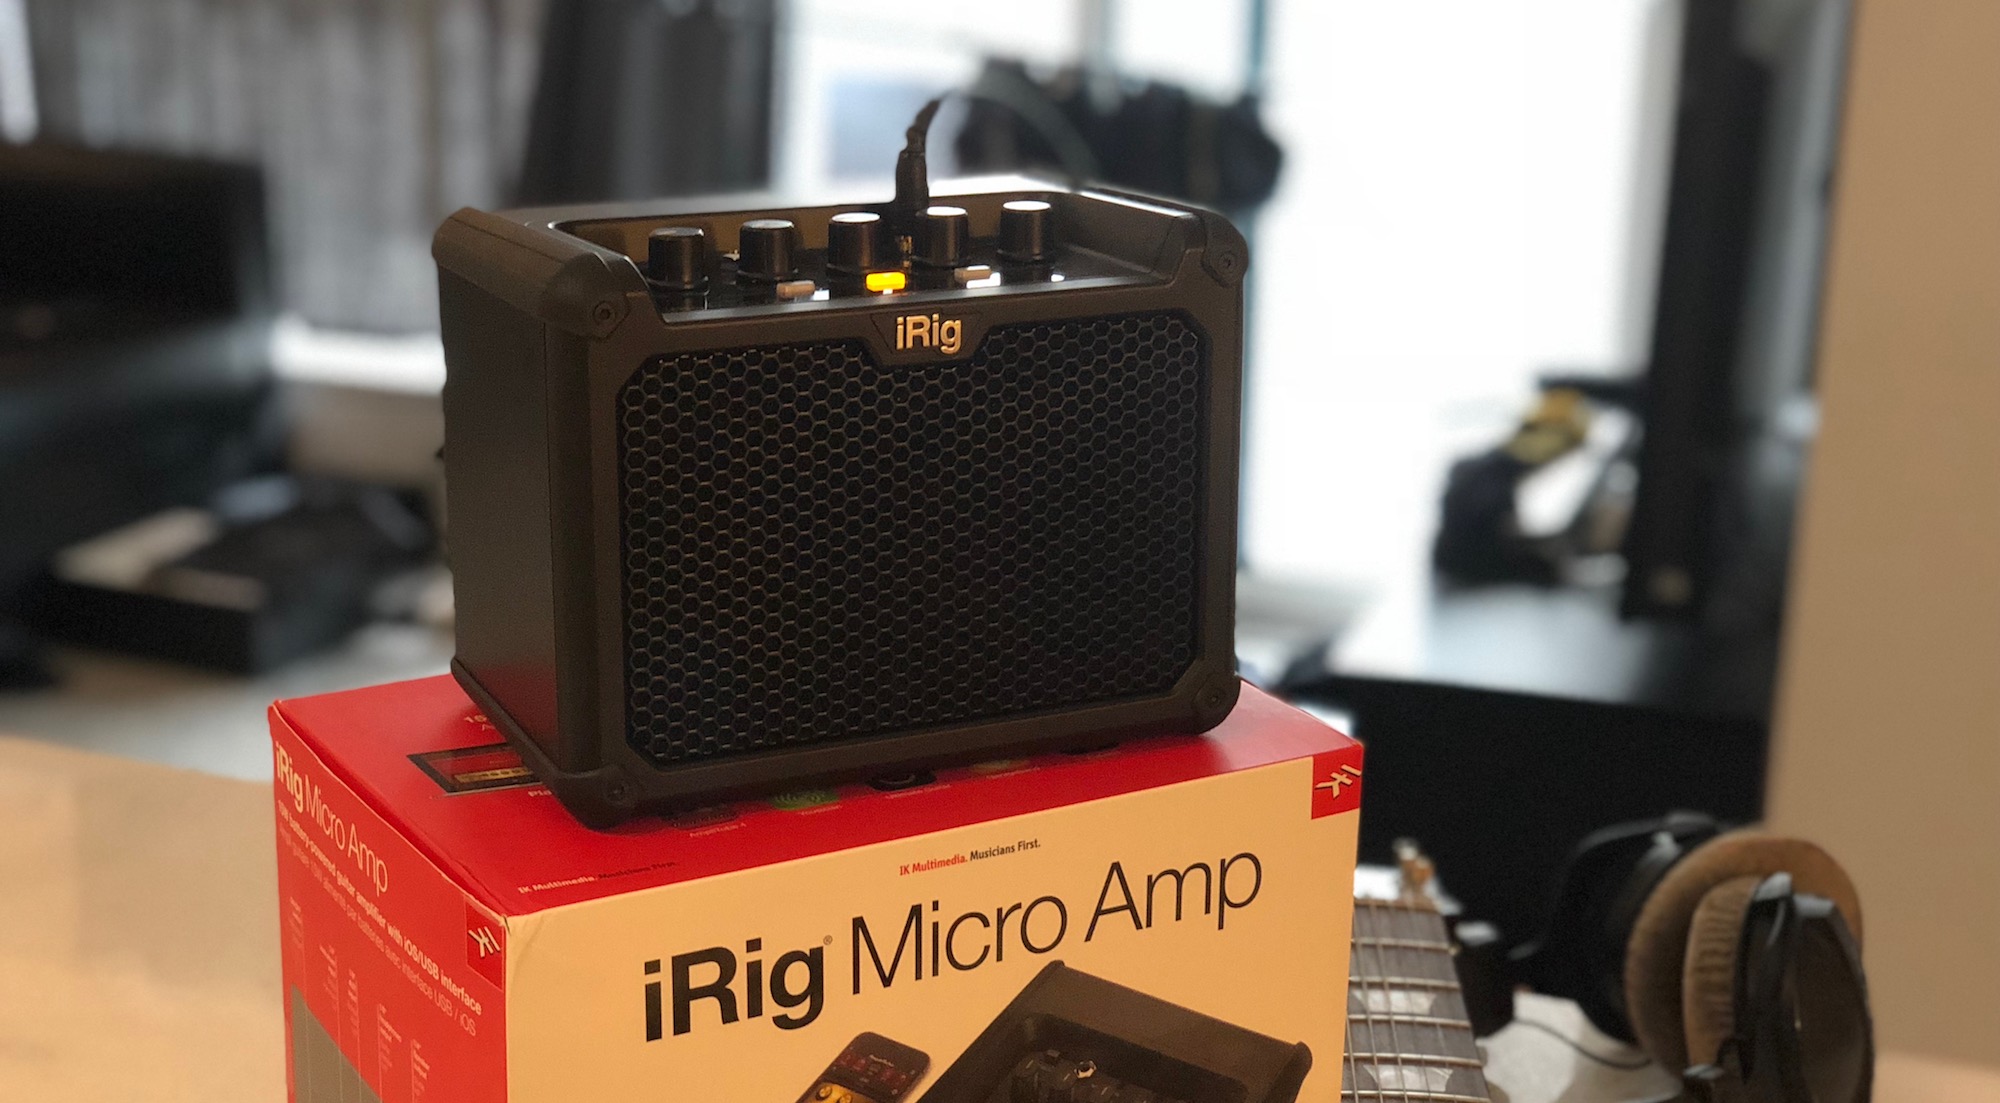 Review: IK Multimedia's iRig Micro mini guitar amp - 9to5Toys